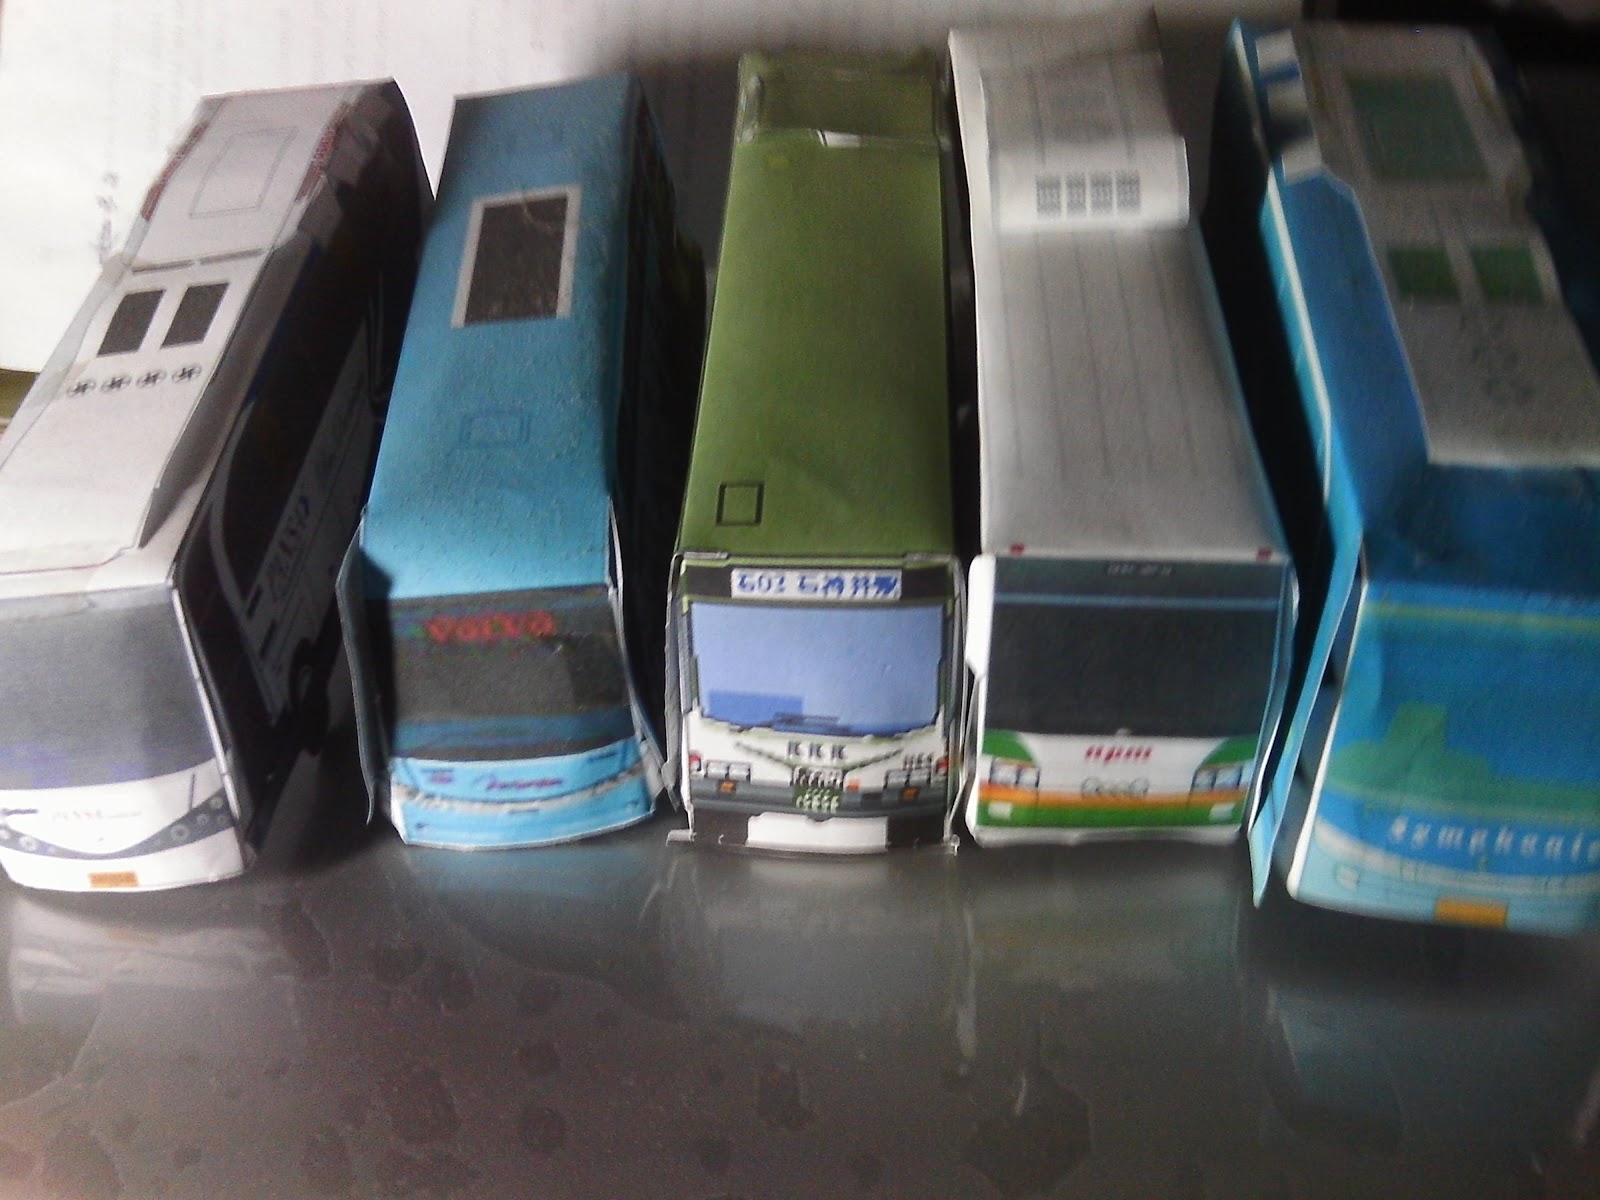 paper craft miniature bus Indonesia: kerajinan miniatur bus di ...